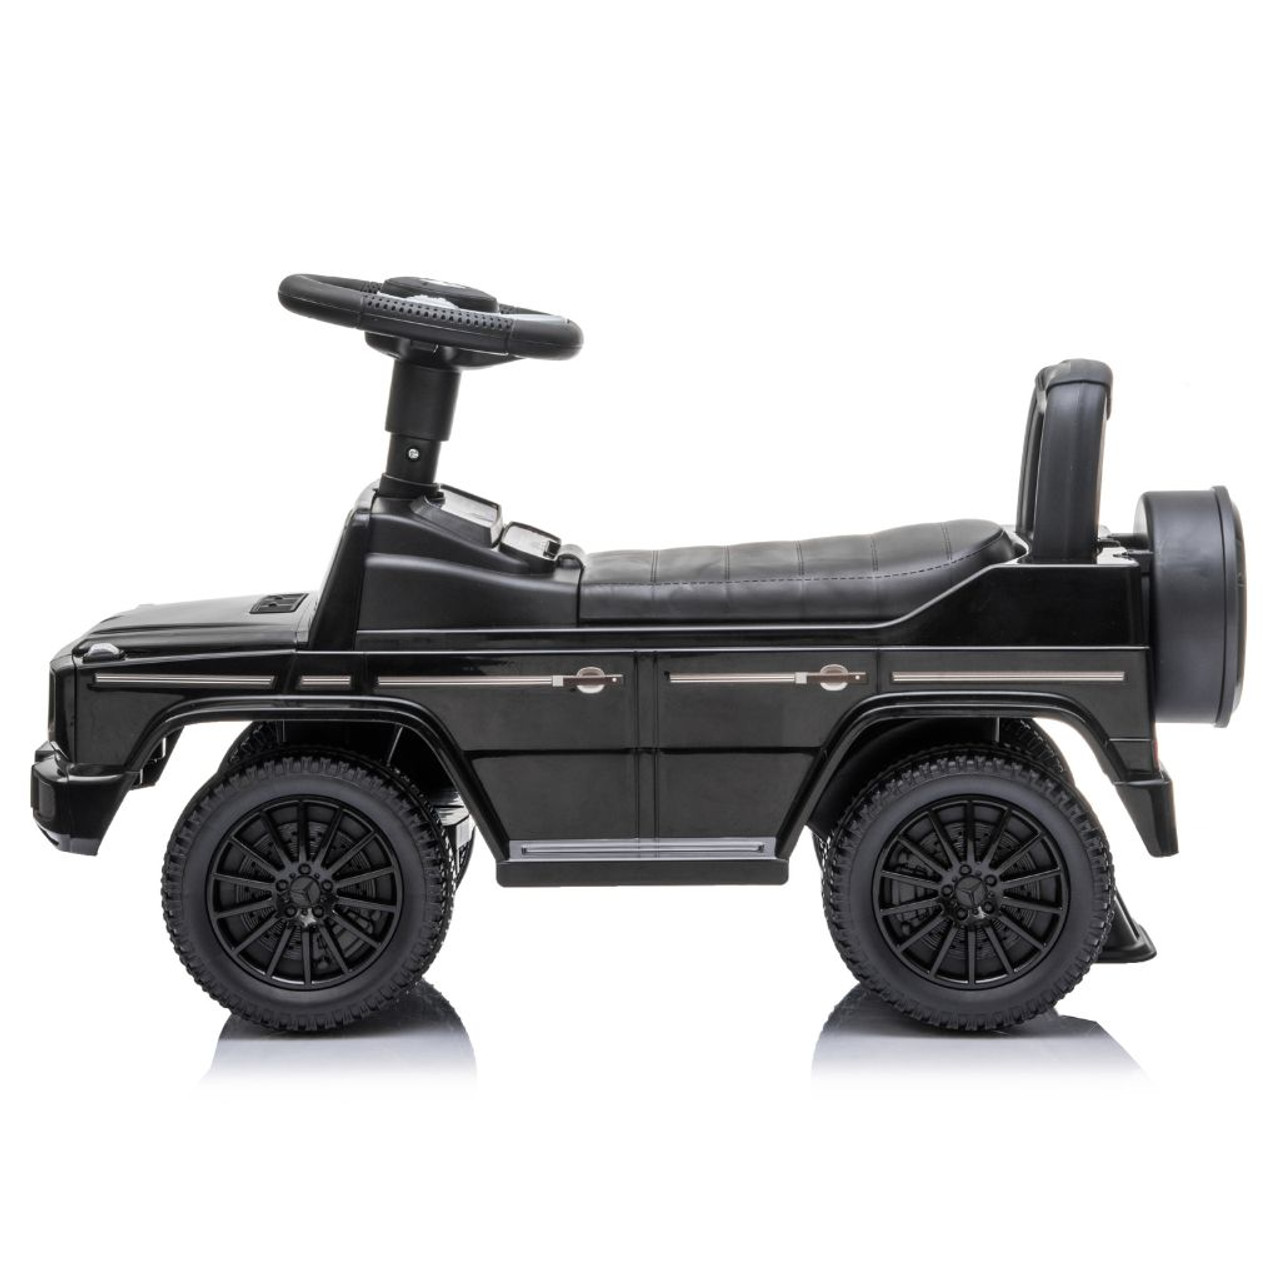 Kids' Ride-on Mercedes G-Wagon Push Car product image